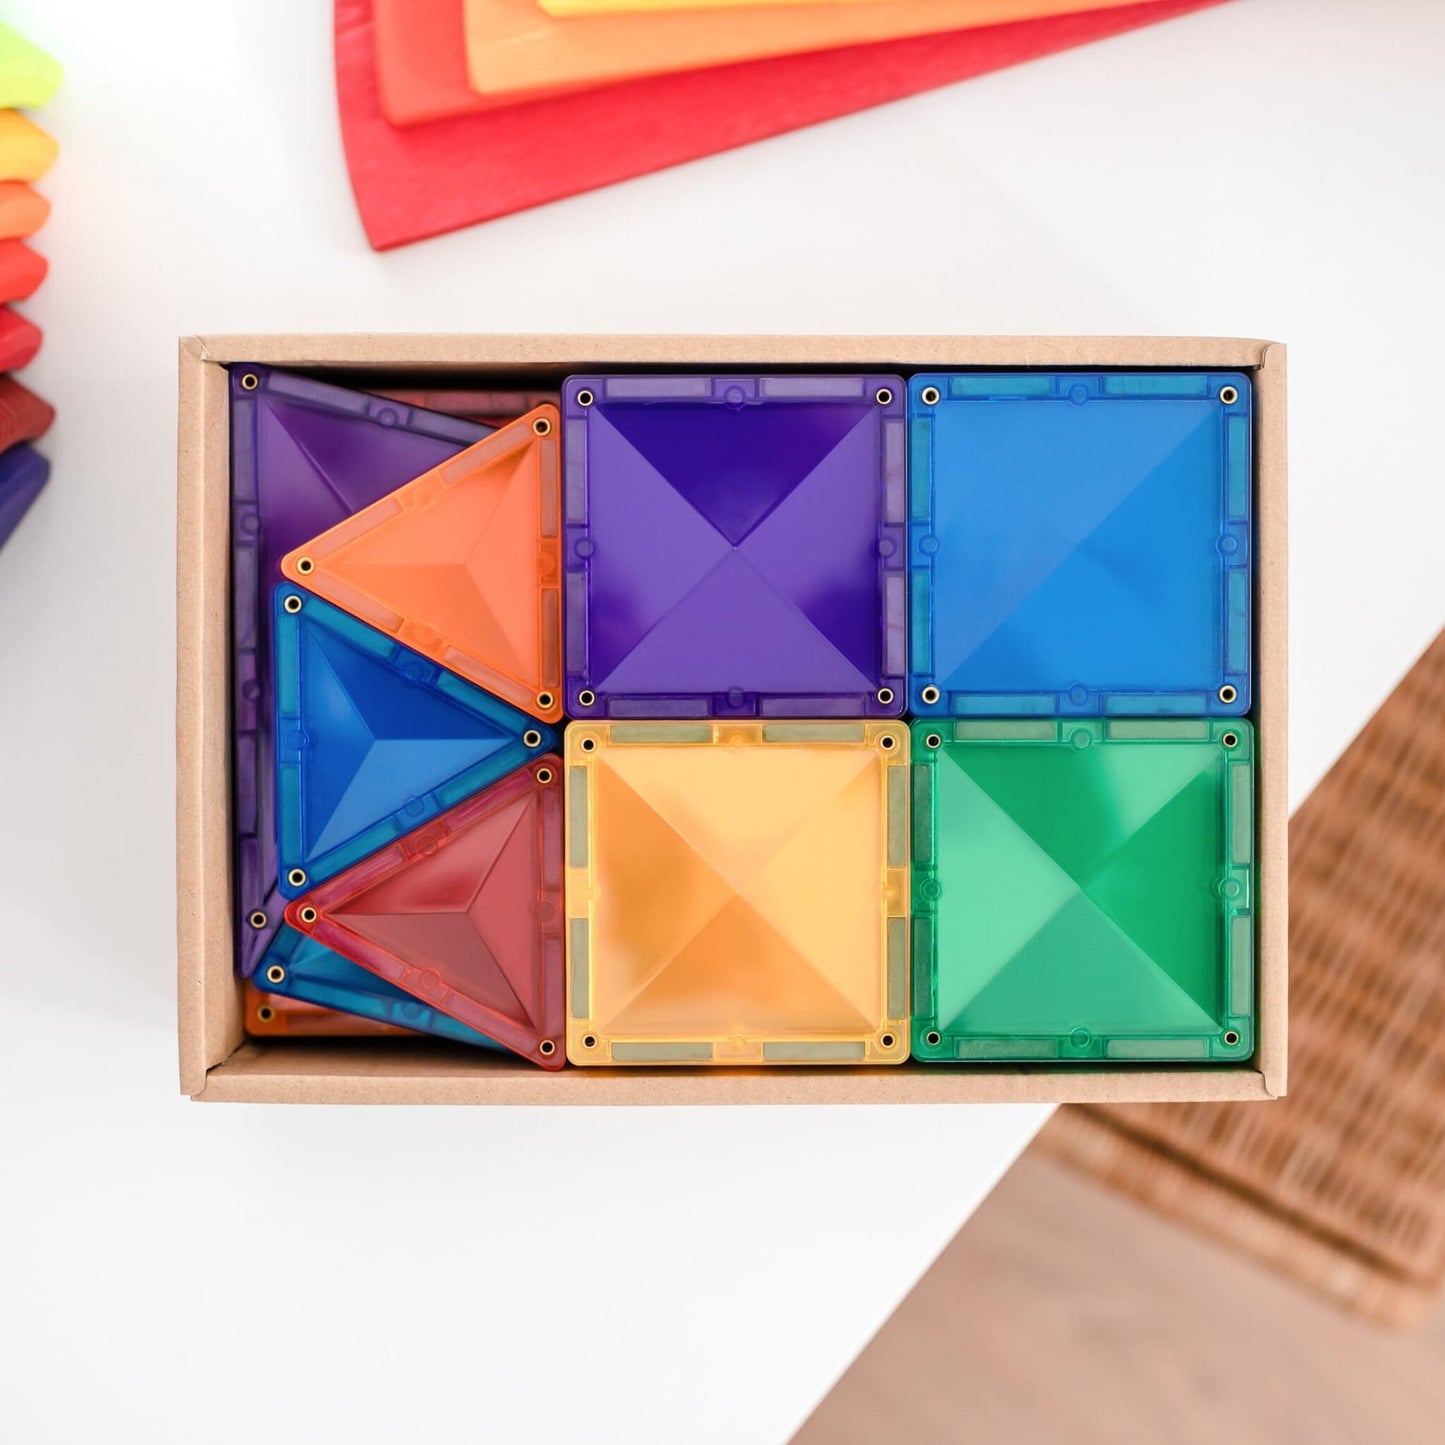 Connetix Tiles | Rainbow | 60pc Starter Pack